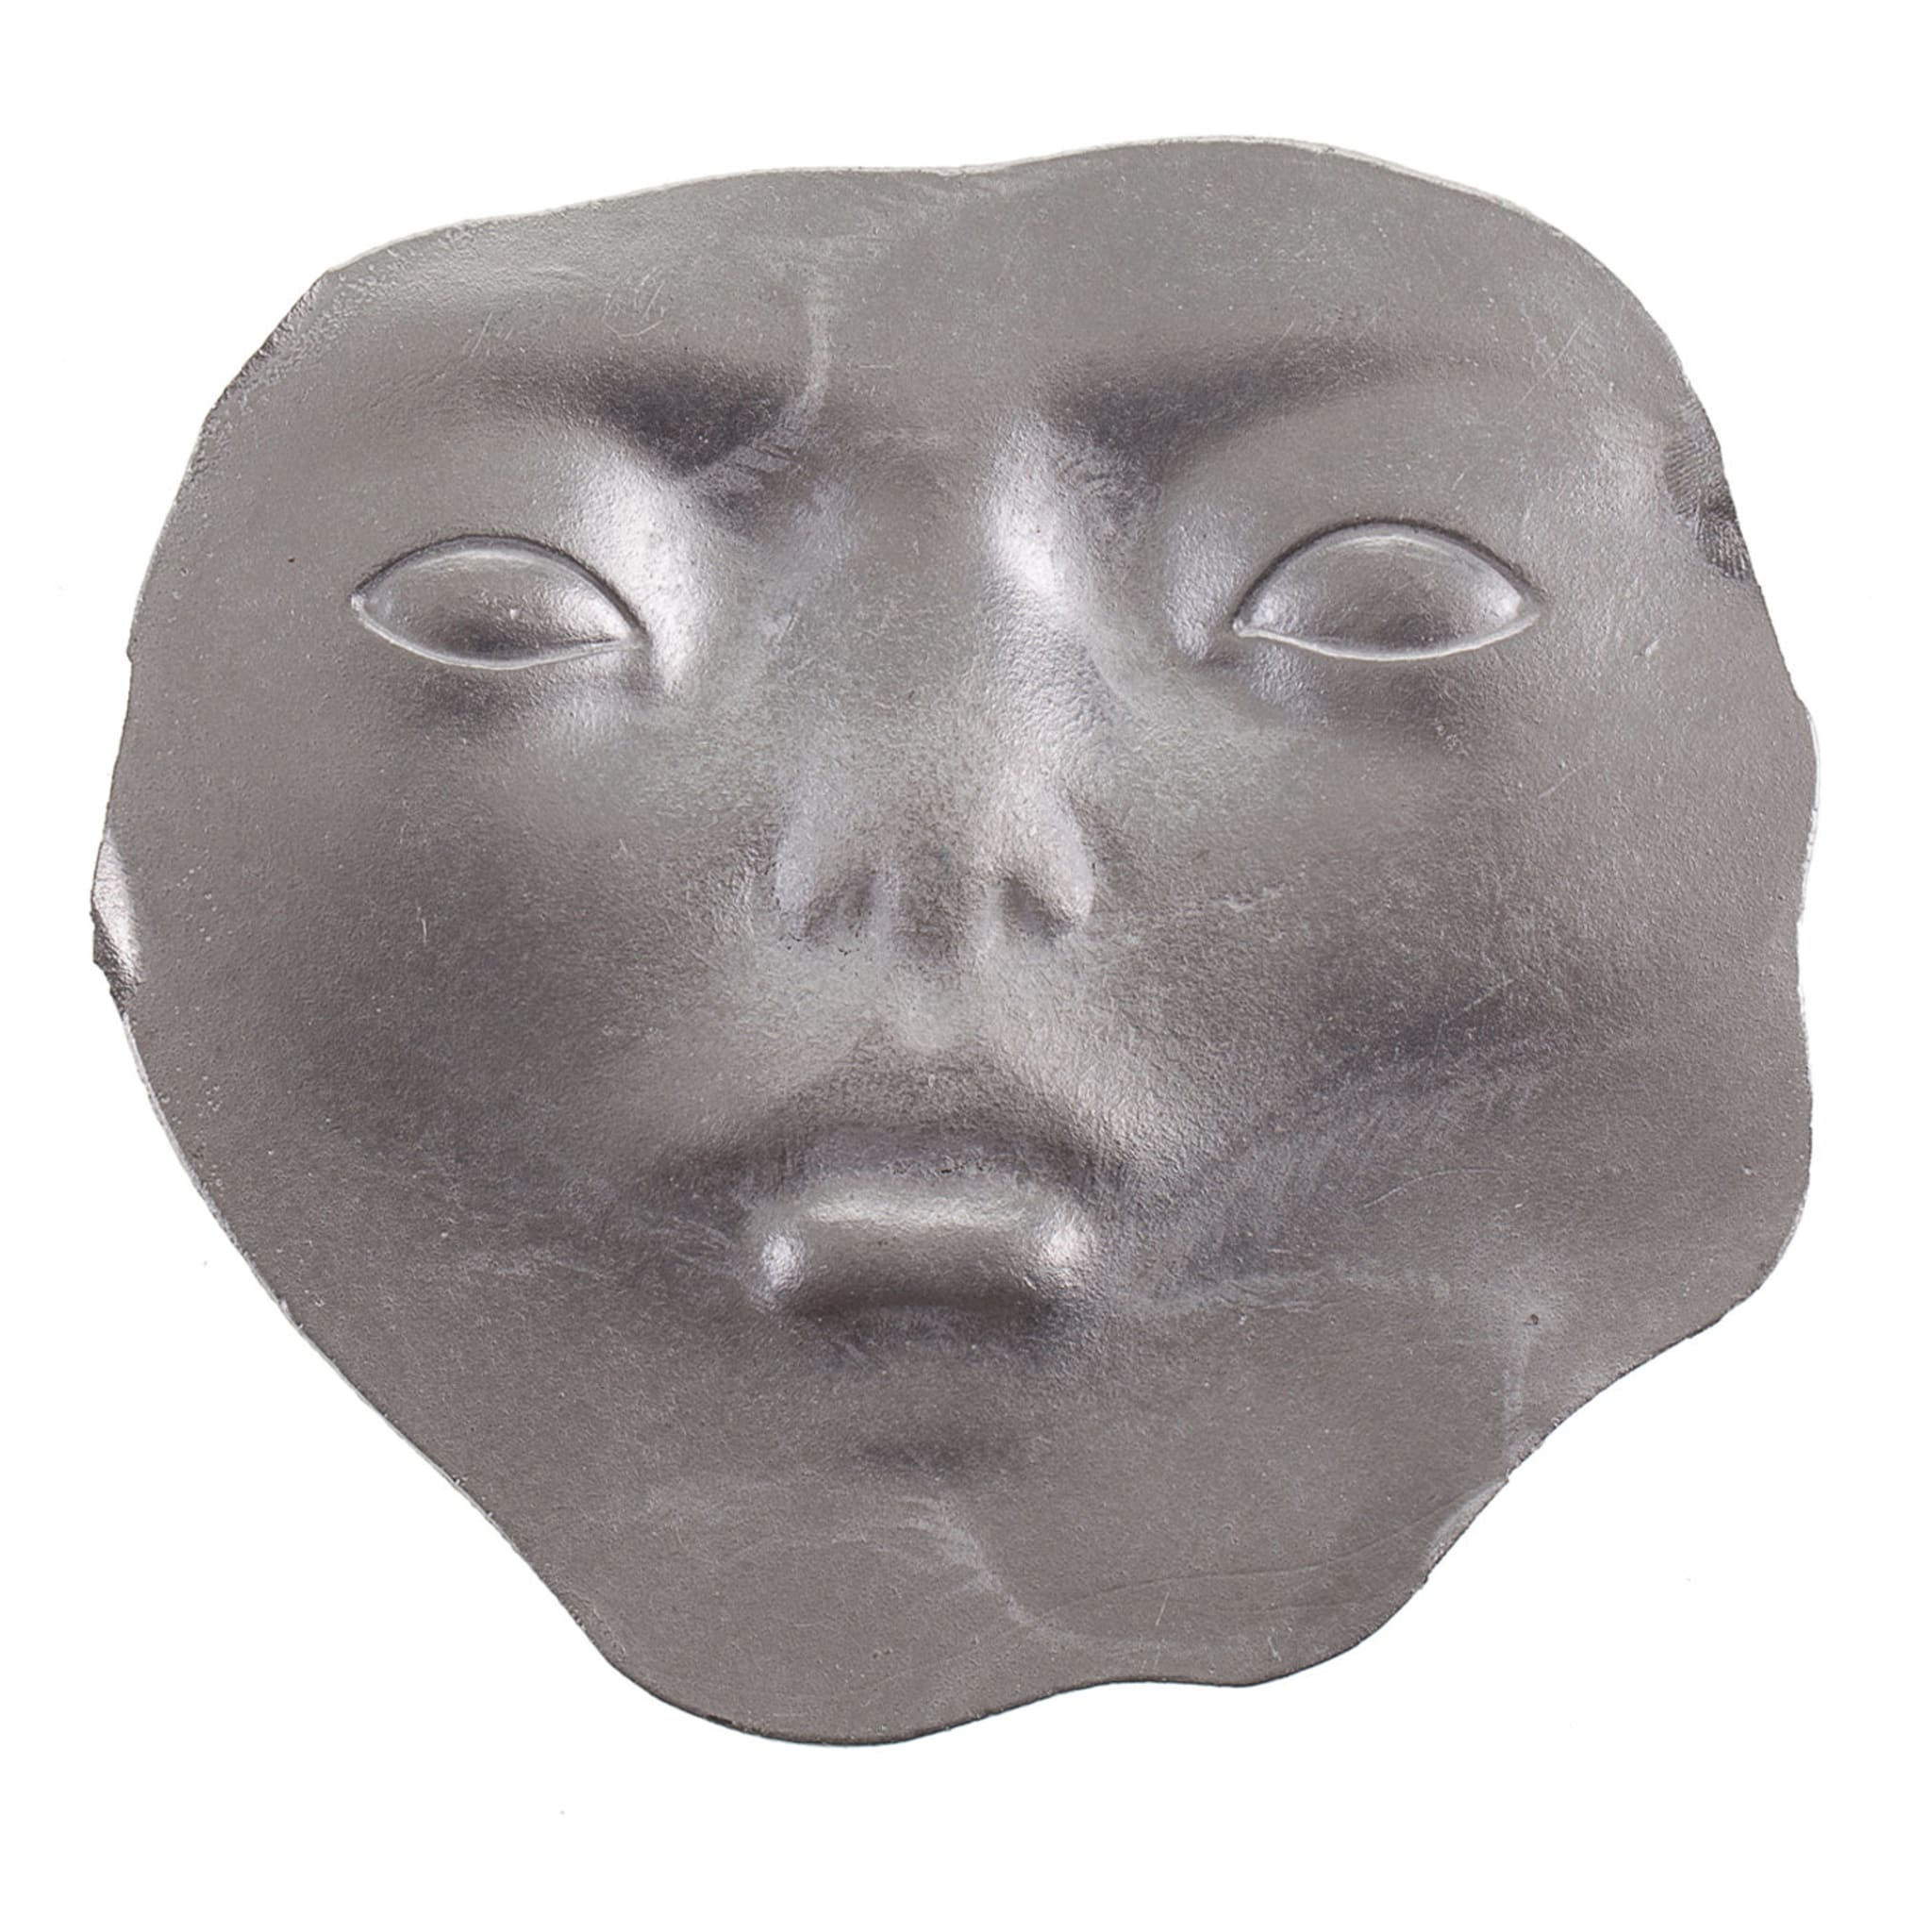 The Human Face Fragment Sculpture - Main view